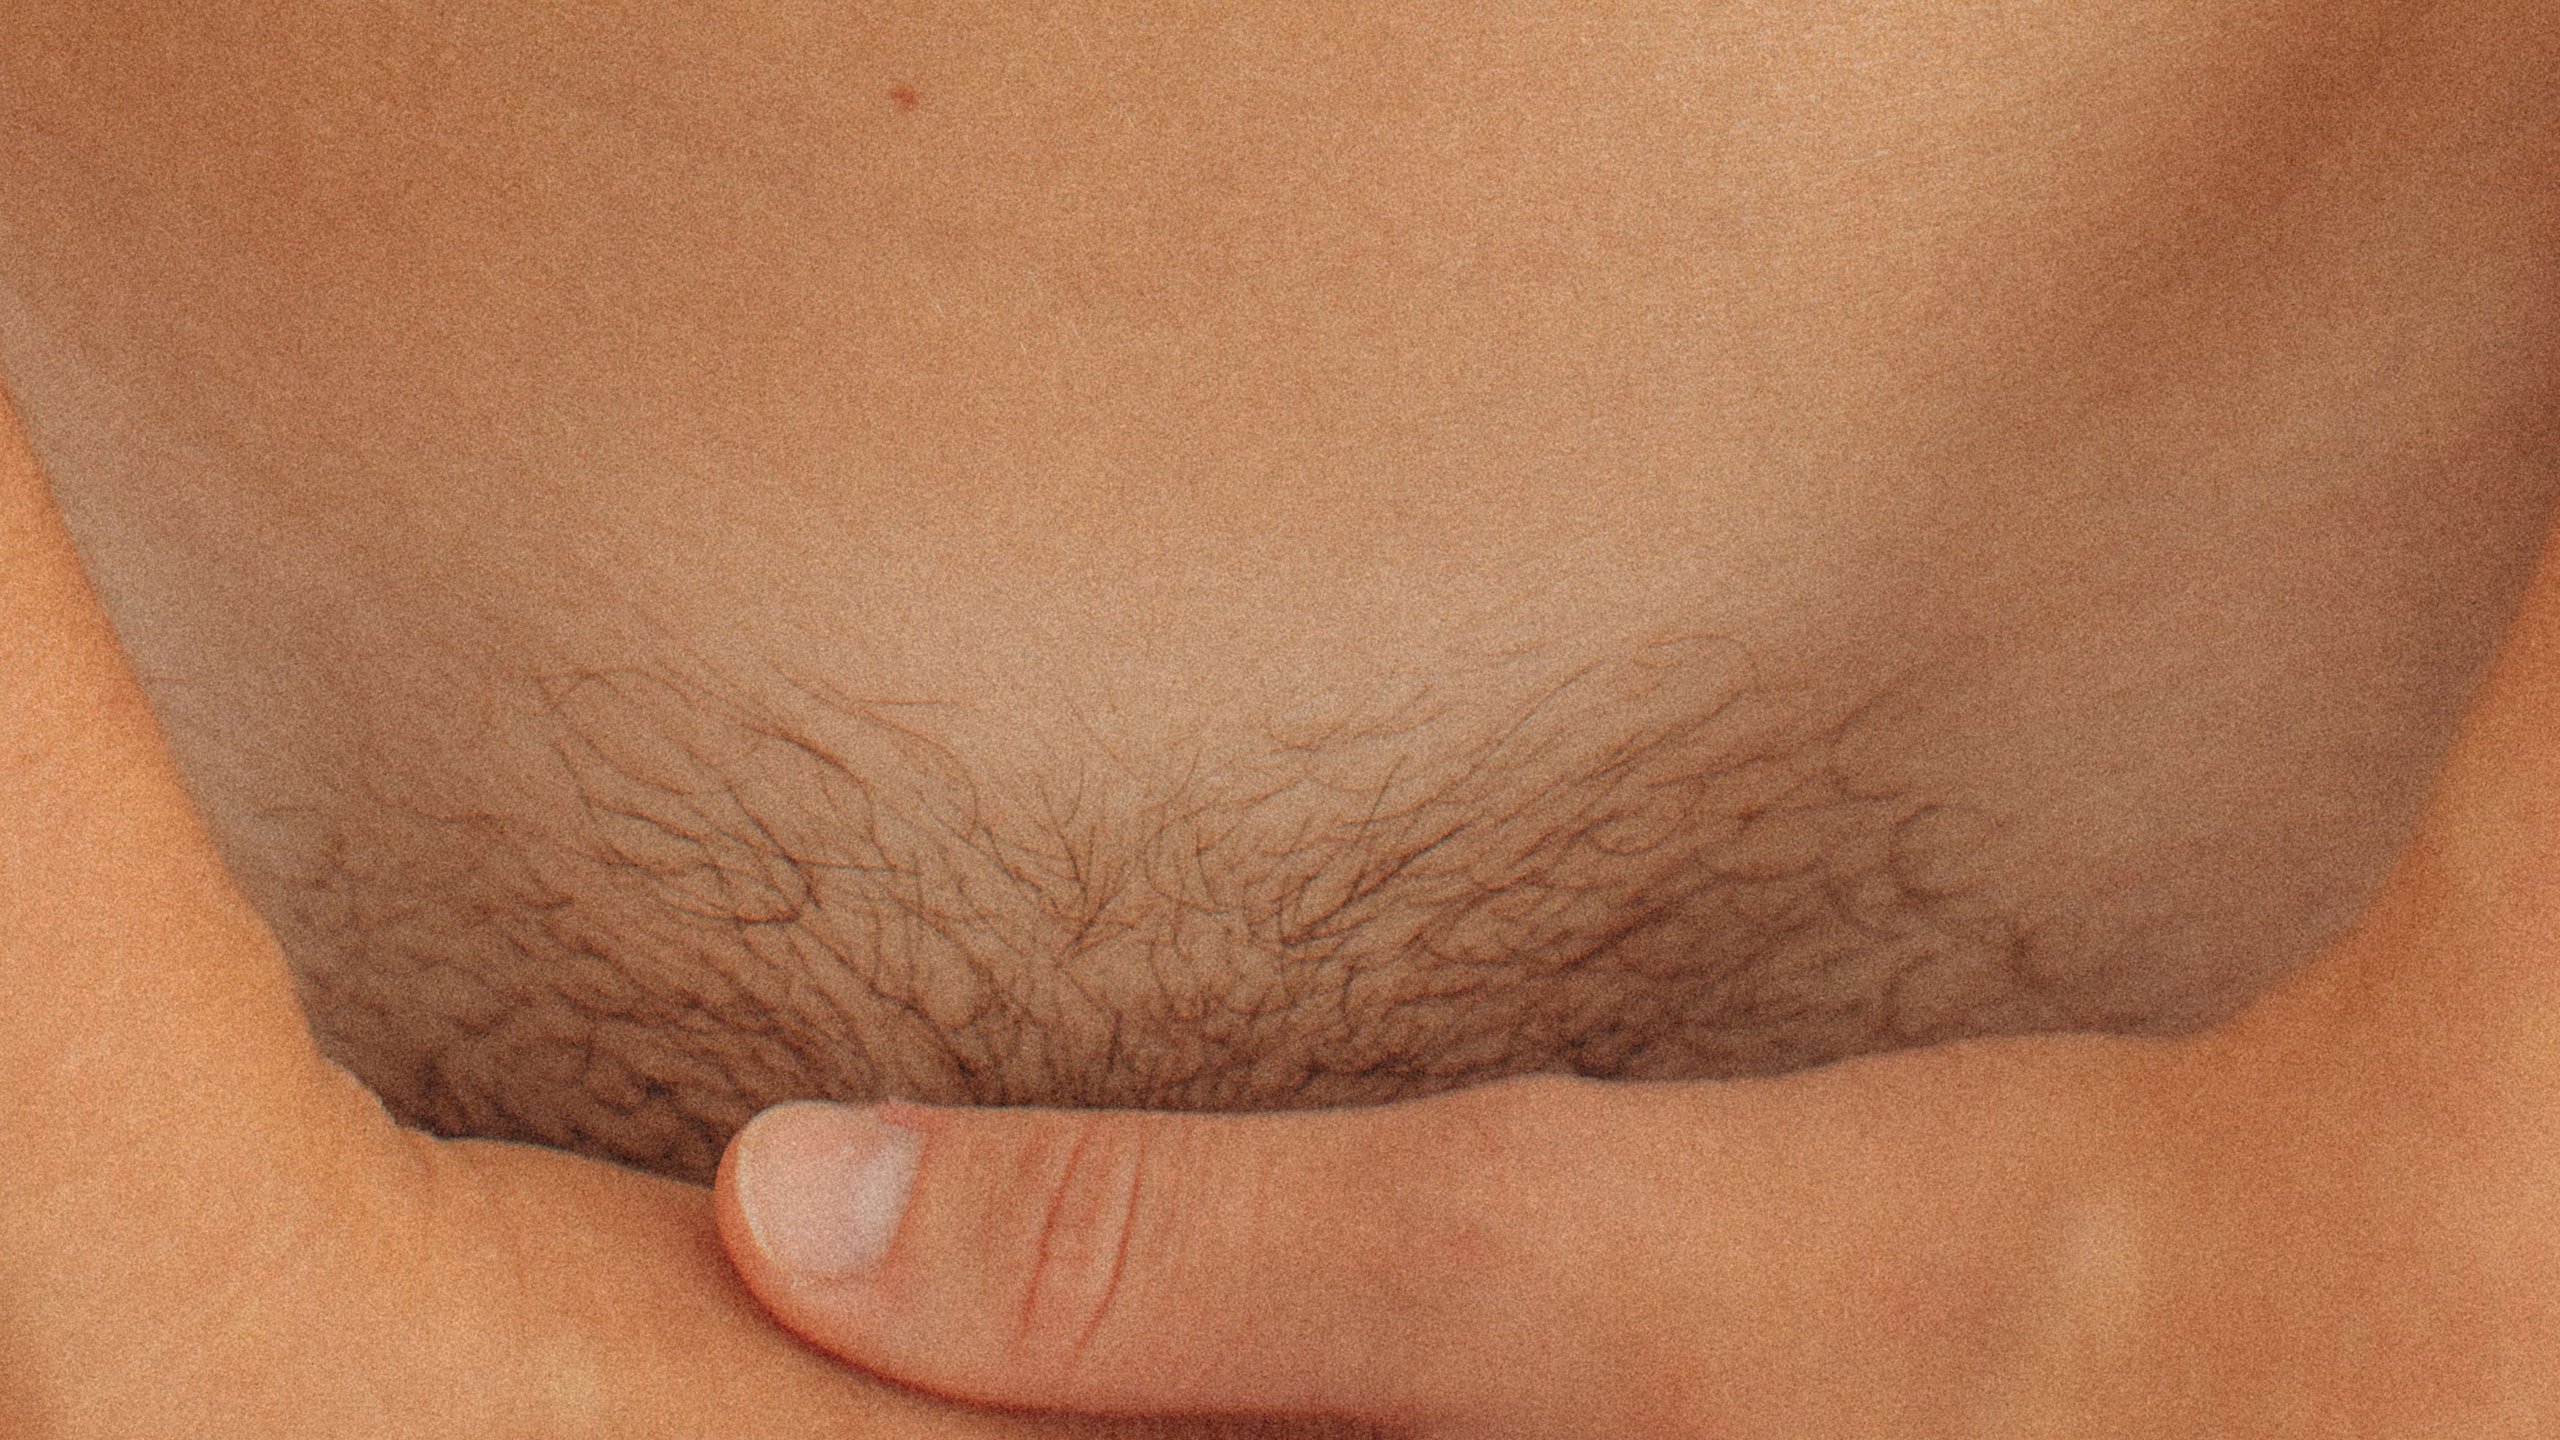 donna osullivan add photo hairy or shaved vagina